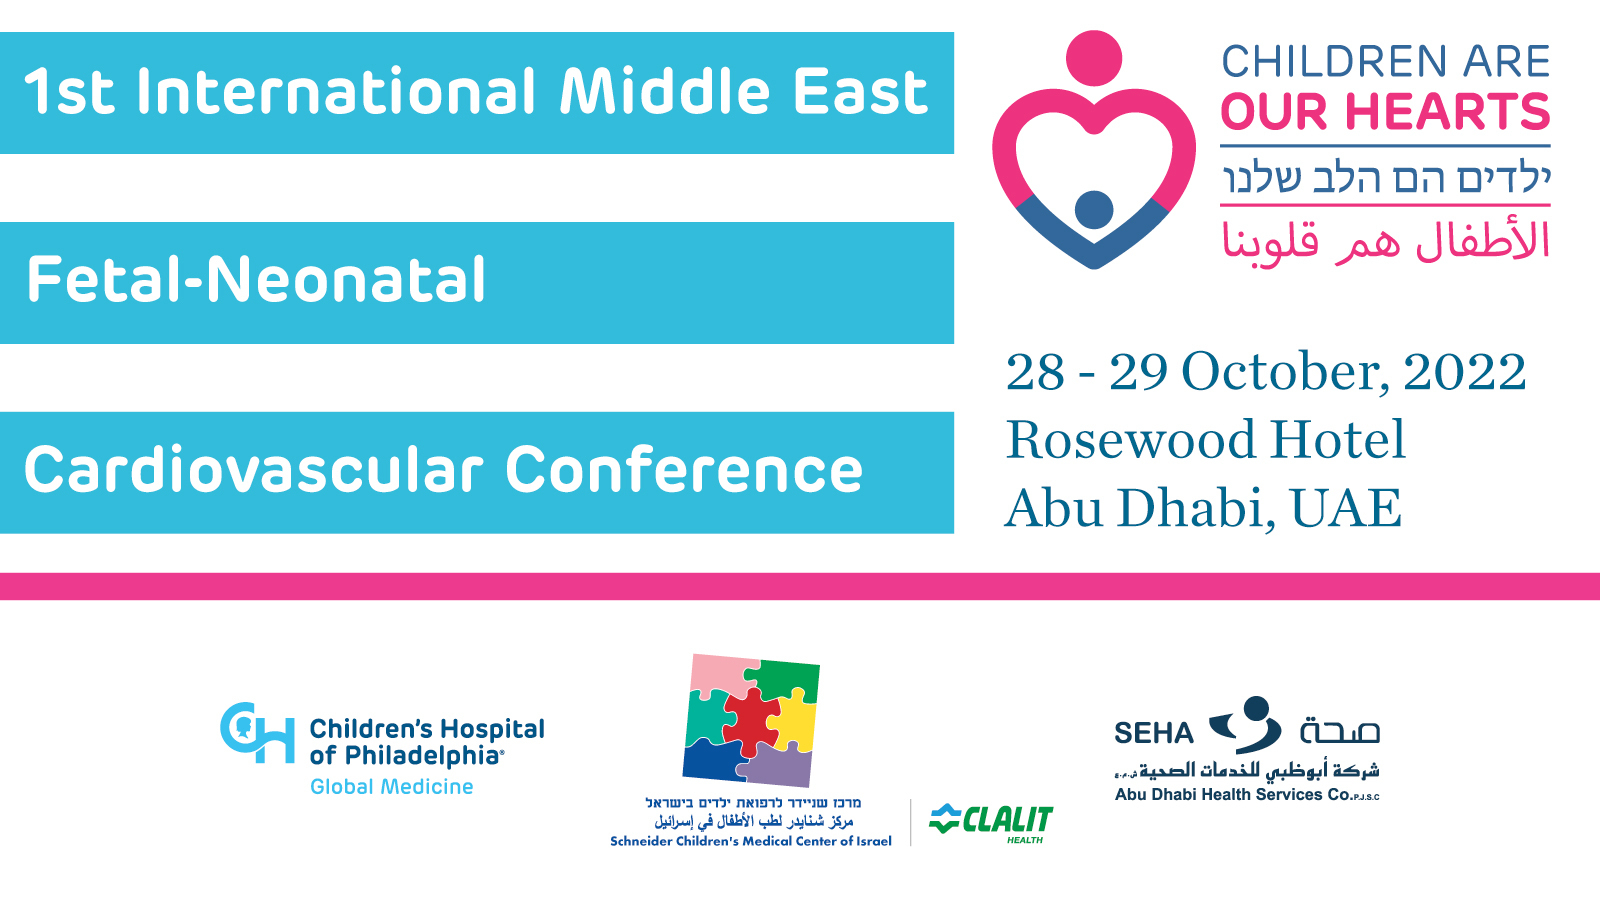 1ST INTERNATIONAL MIDDLE EAST FETAL-NEONATAL CARDIOVASCULAR DISEASE CONFERENCE, Abu Dhabi, United Arab Emirates